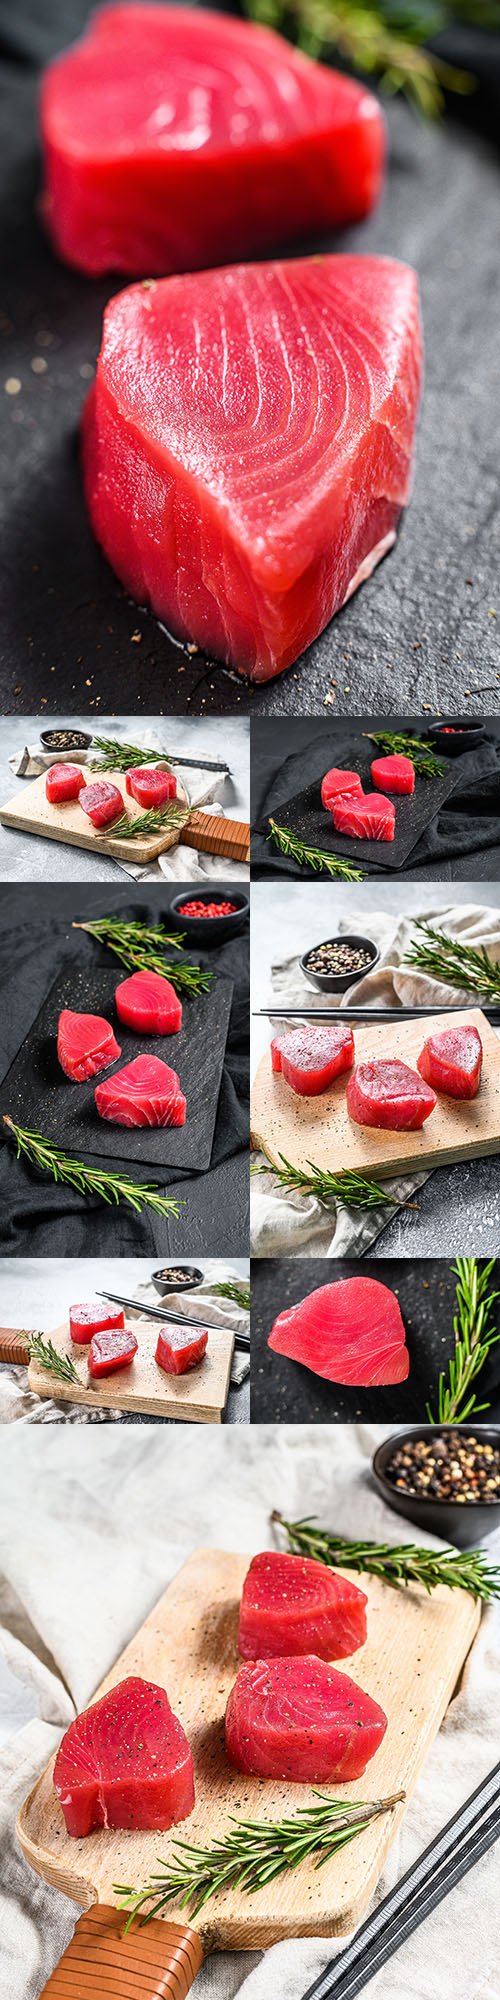 Tuna fresh steak with rosemary useful food